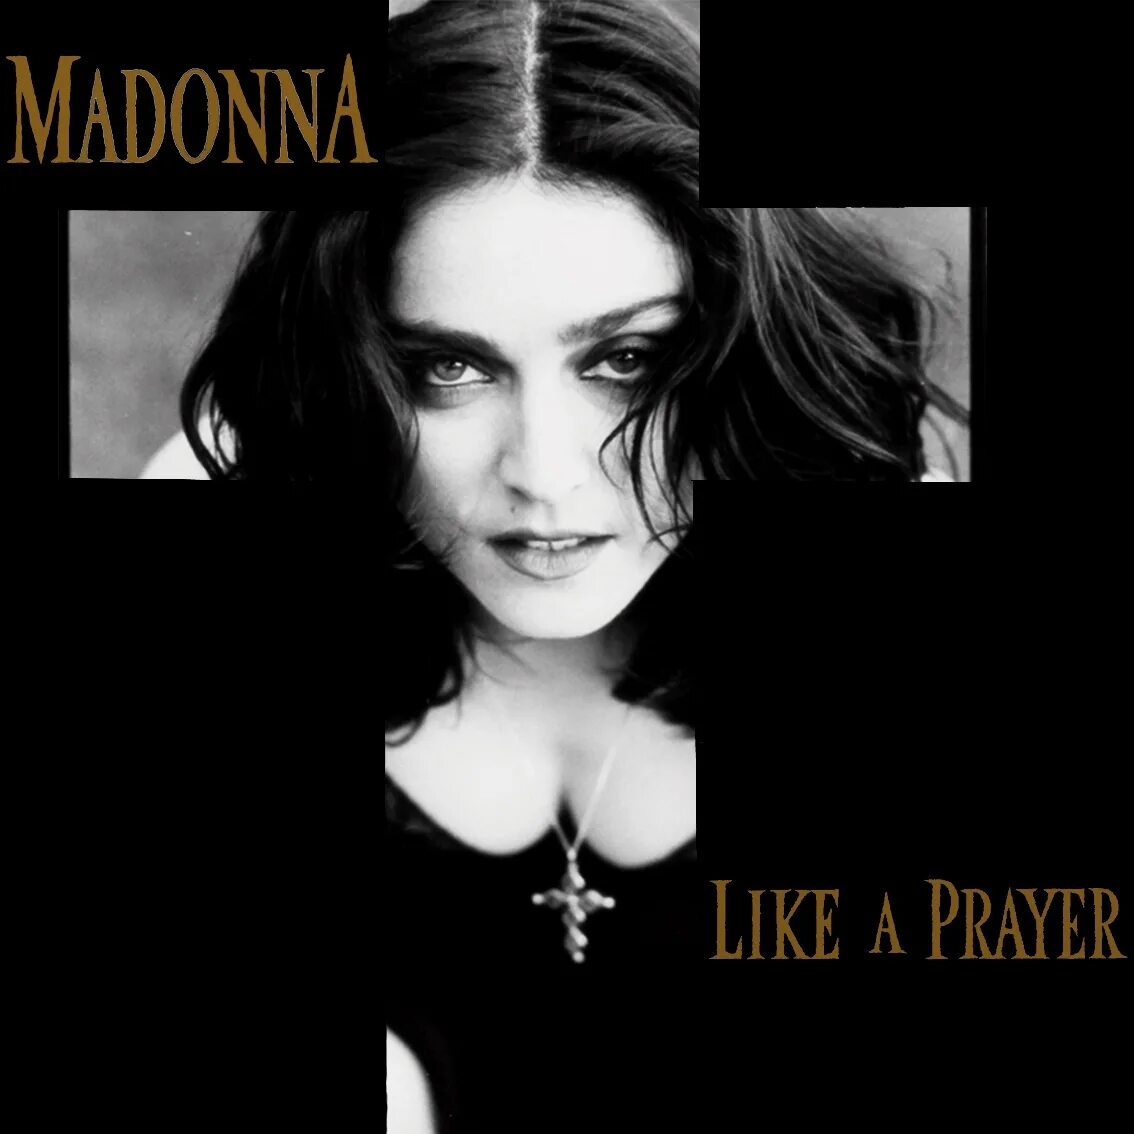 Like madonna песня. Мадонна лайк а Прайер. Like a Prayer обложка. Мадонна в молодости like a Prayer. Мадонна like a Prayer фото.